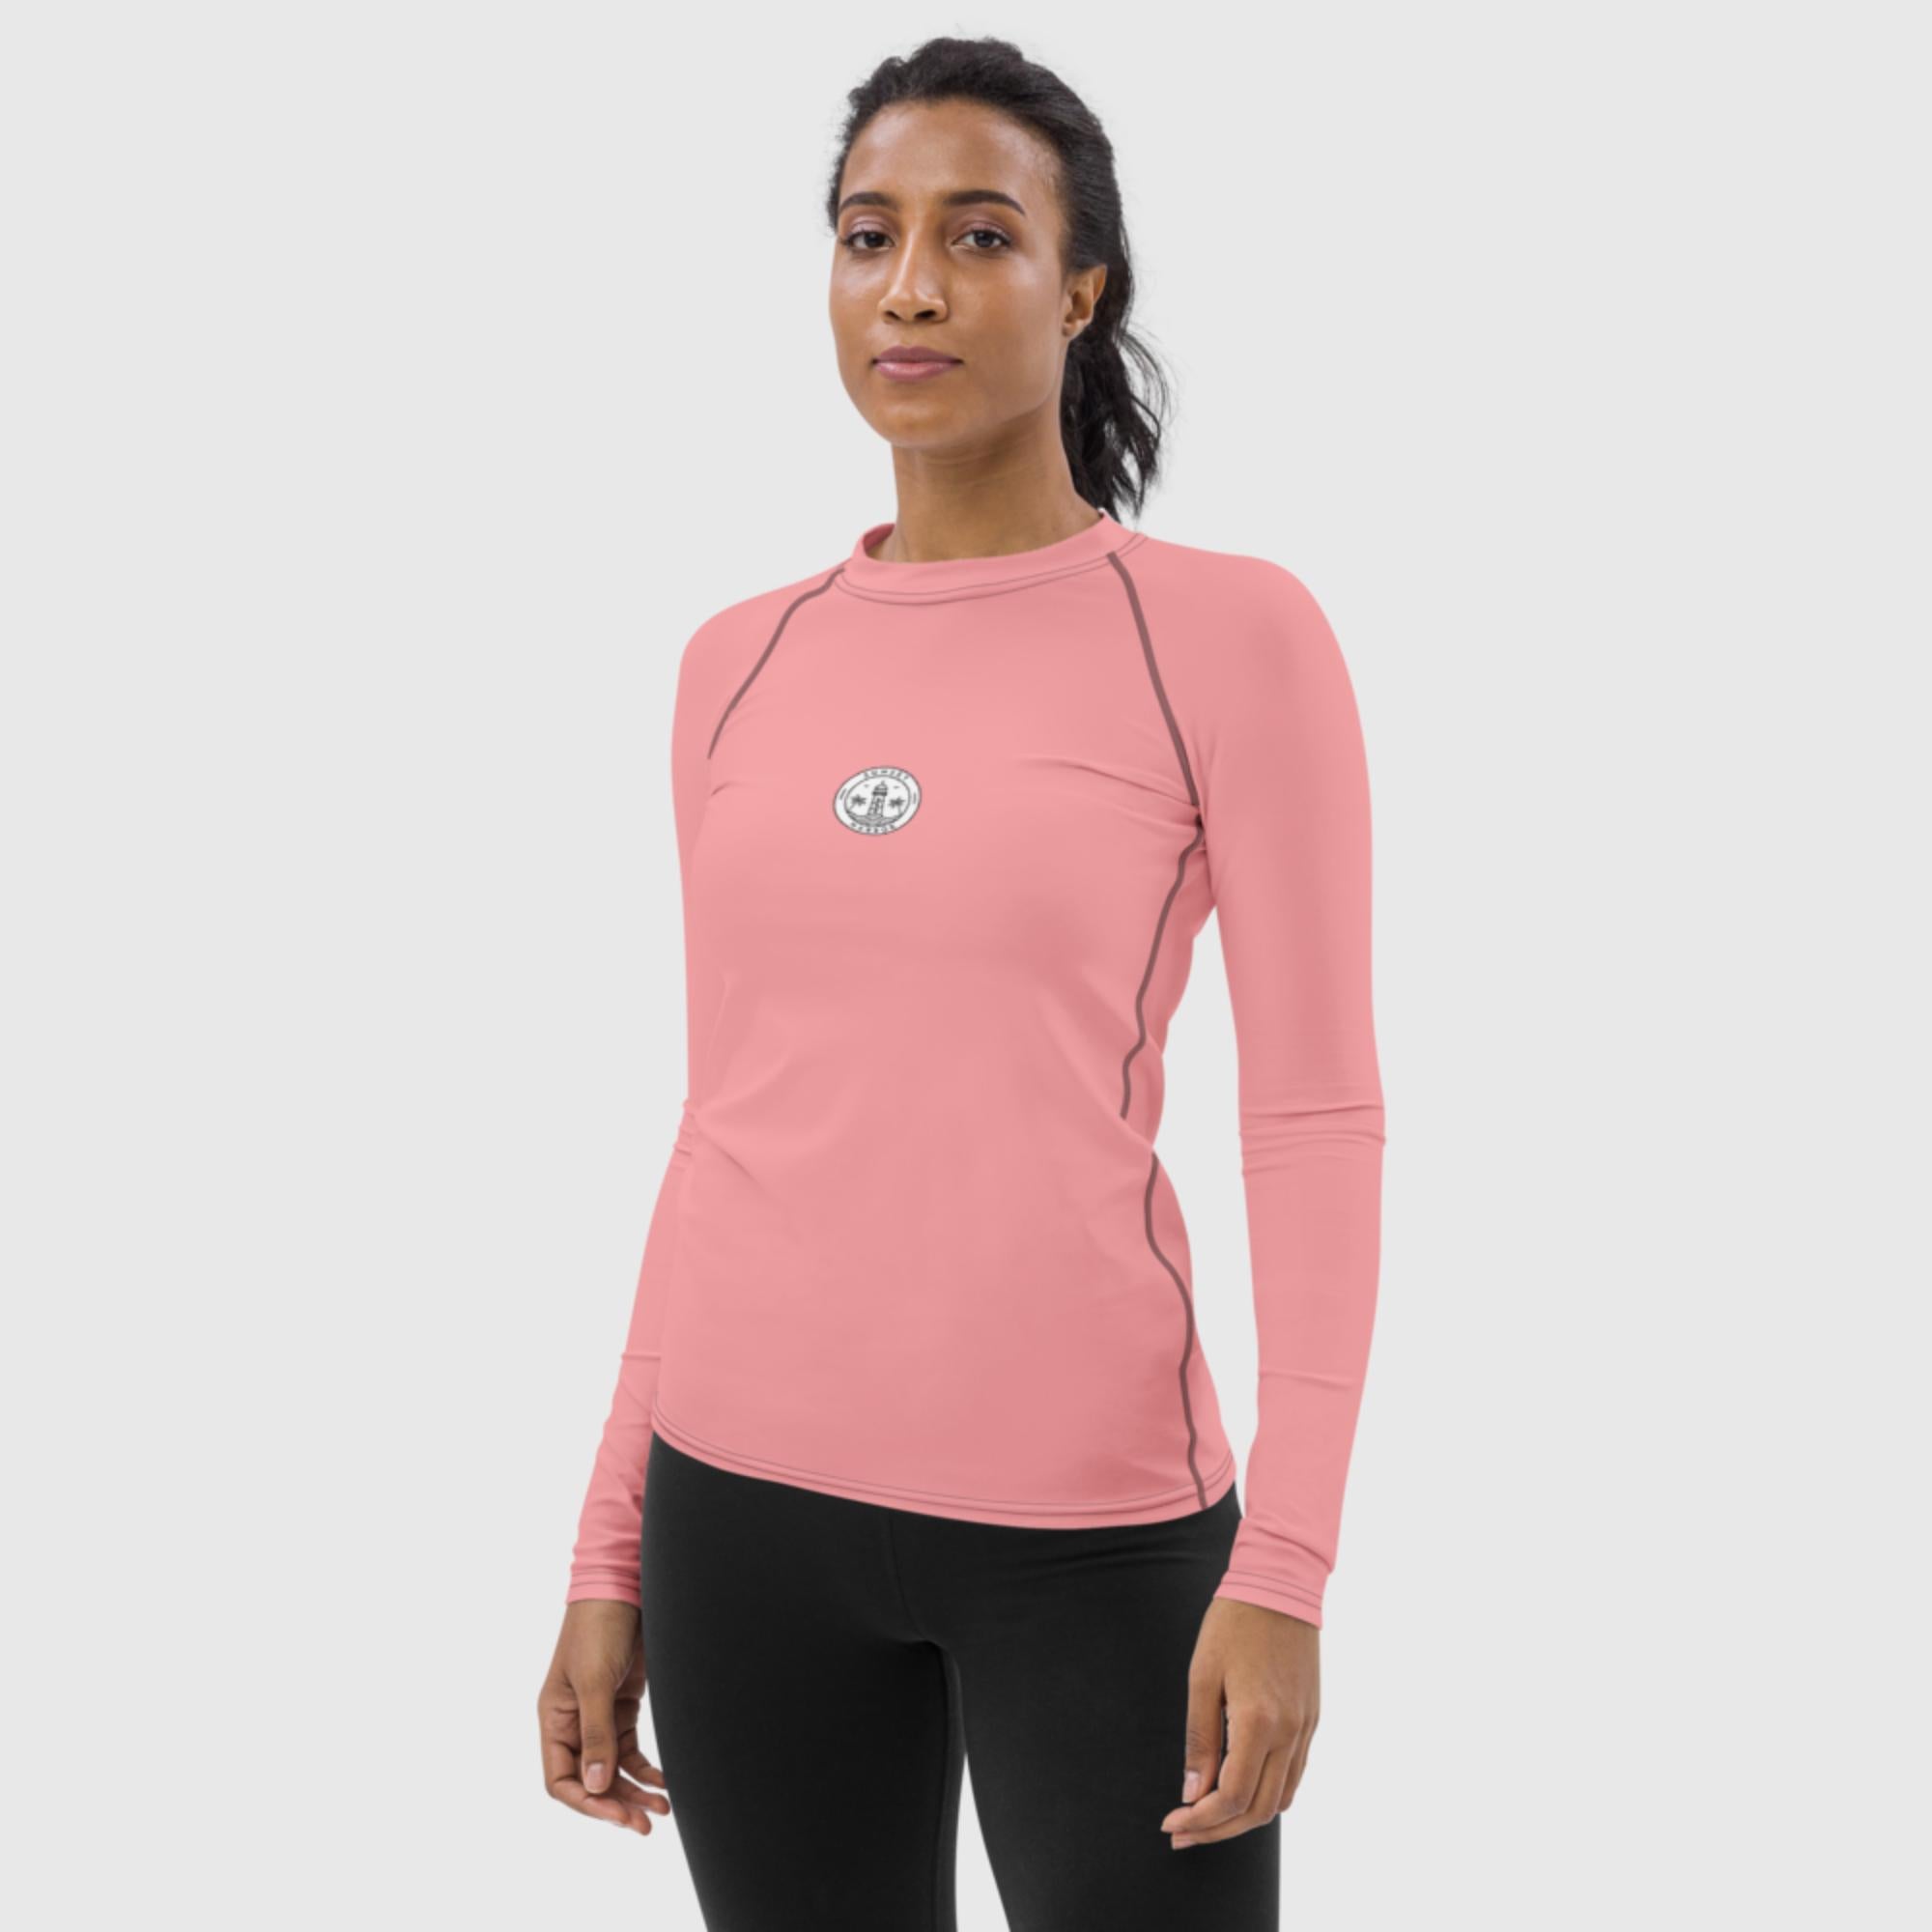 Women's Rash Guard - Pink - Sunset Harbor Clothing